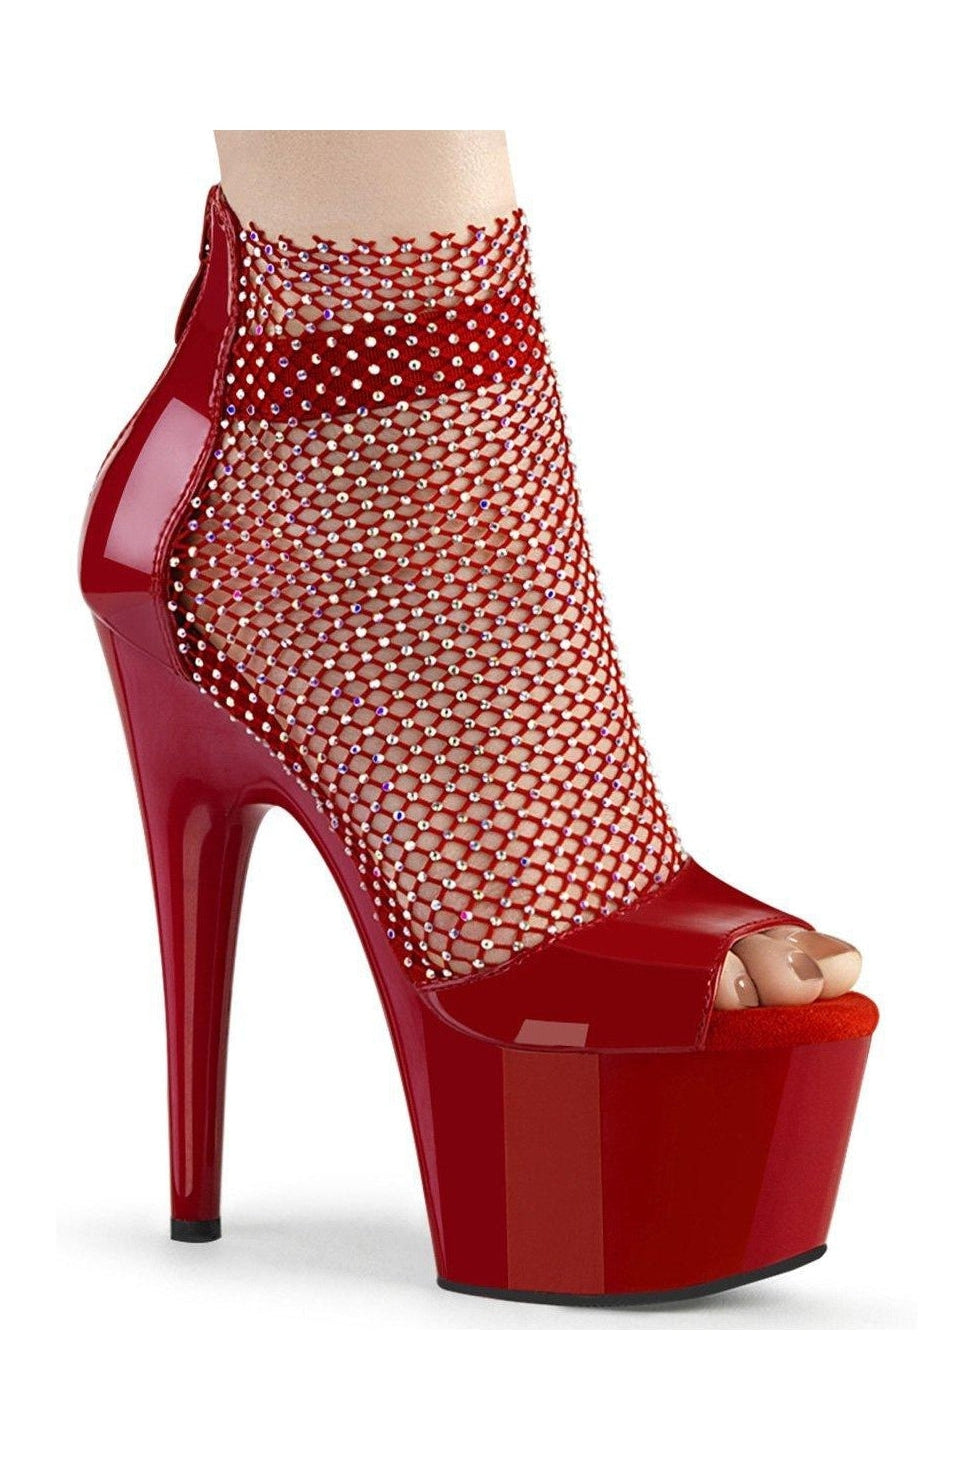 Pleaser Red Sandals Platform Stripper Shoes | Buy at Sexyshoes.com